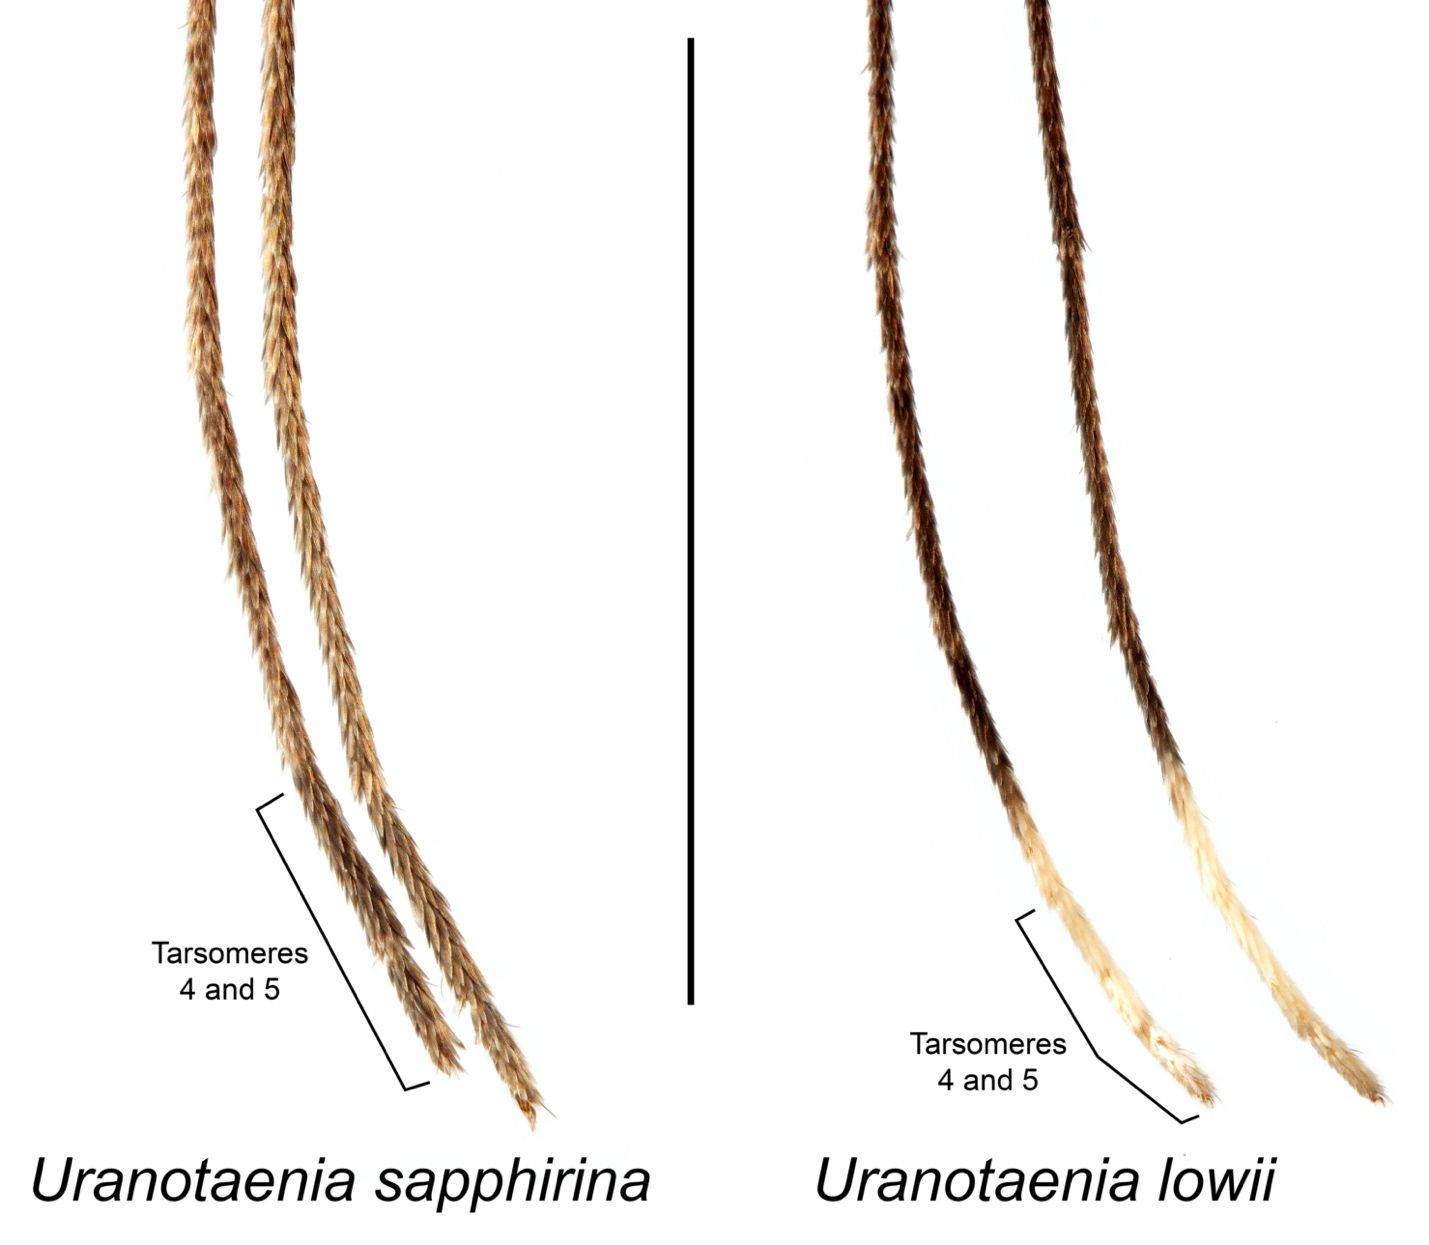 Hind tarsi of adult Uranotaenia sapphirina Osten Sacken and Uranotaenia lowii Theobald. Tarsomeres 4 and 5 of the hind legs are entirely dark scaled in Uranotaenia sapphirina, while in Uranotaenia lowii tarsomeres 4 and 5 are entirely pale scaled. 